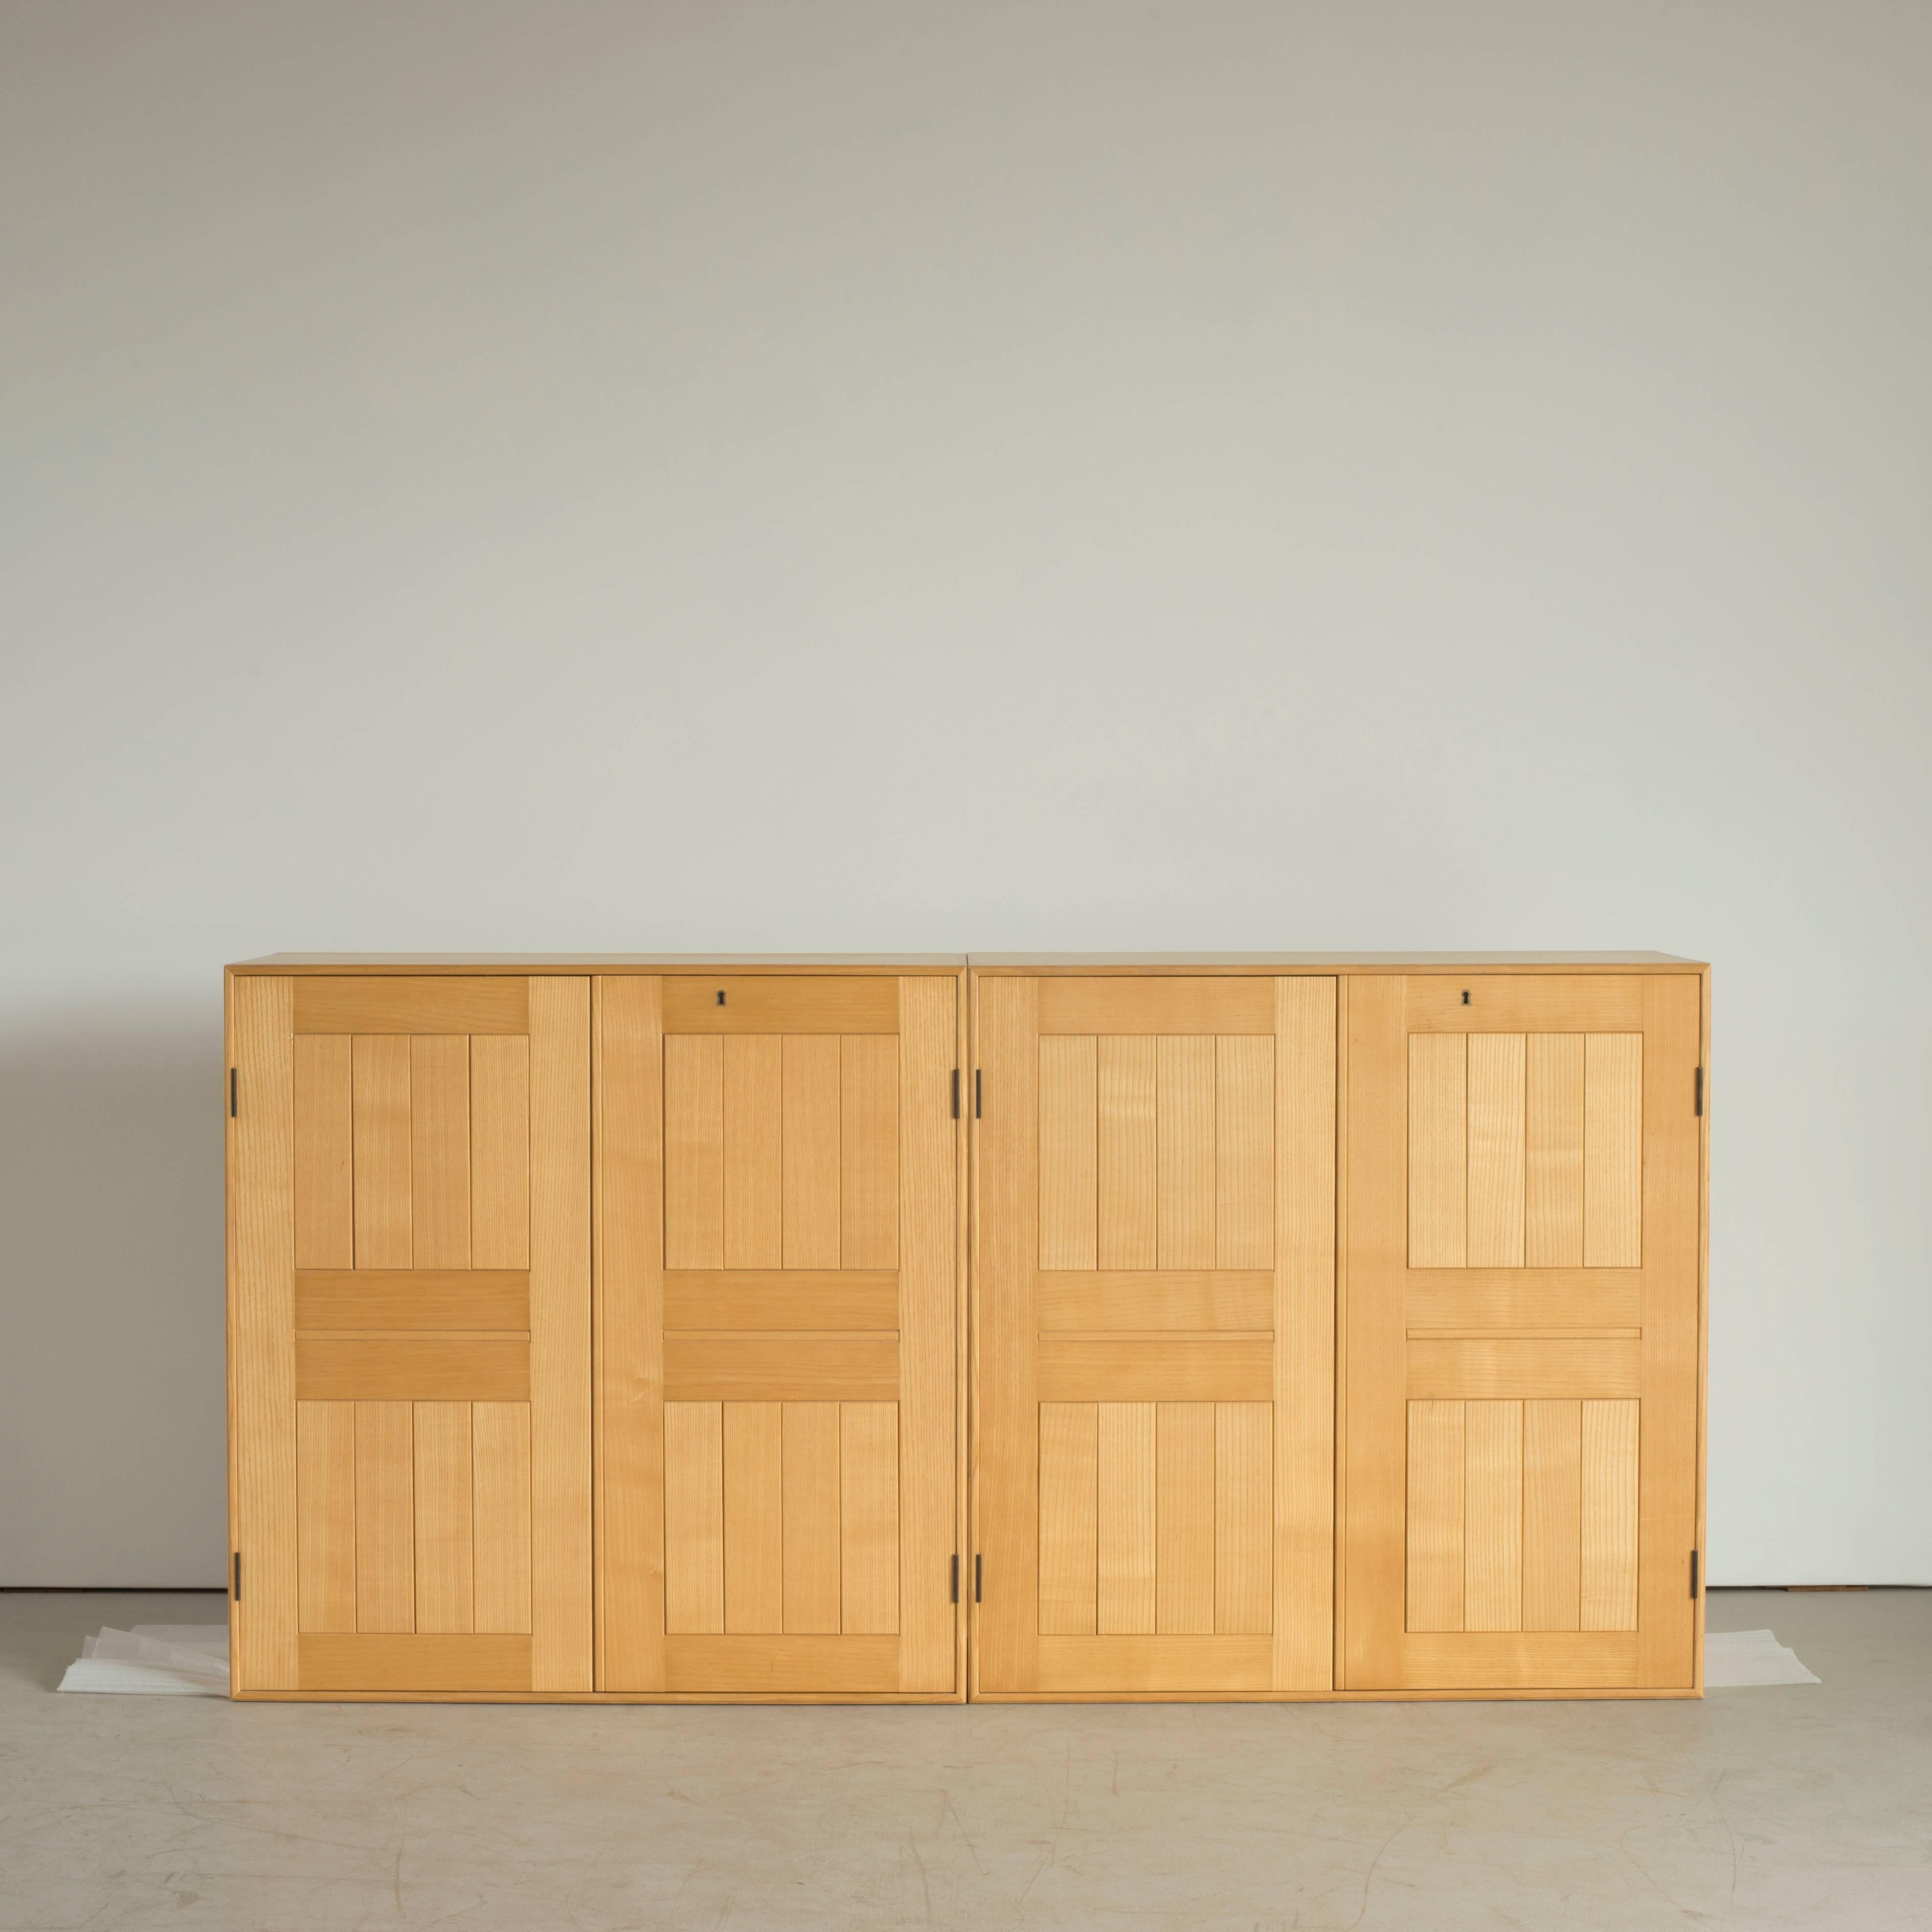 Two cabinets in ash by Mogens Koch. Executed by Rud. Rasmussen.

Reverse with paper labels ‘RUD. RASMUSSENS/SNEDKERIER/COPENHAGEN/DENMARK.